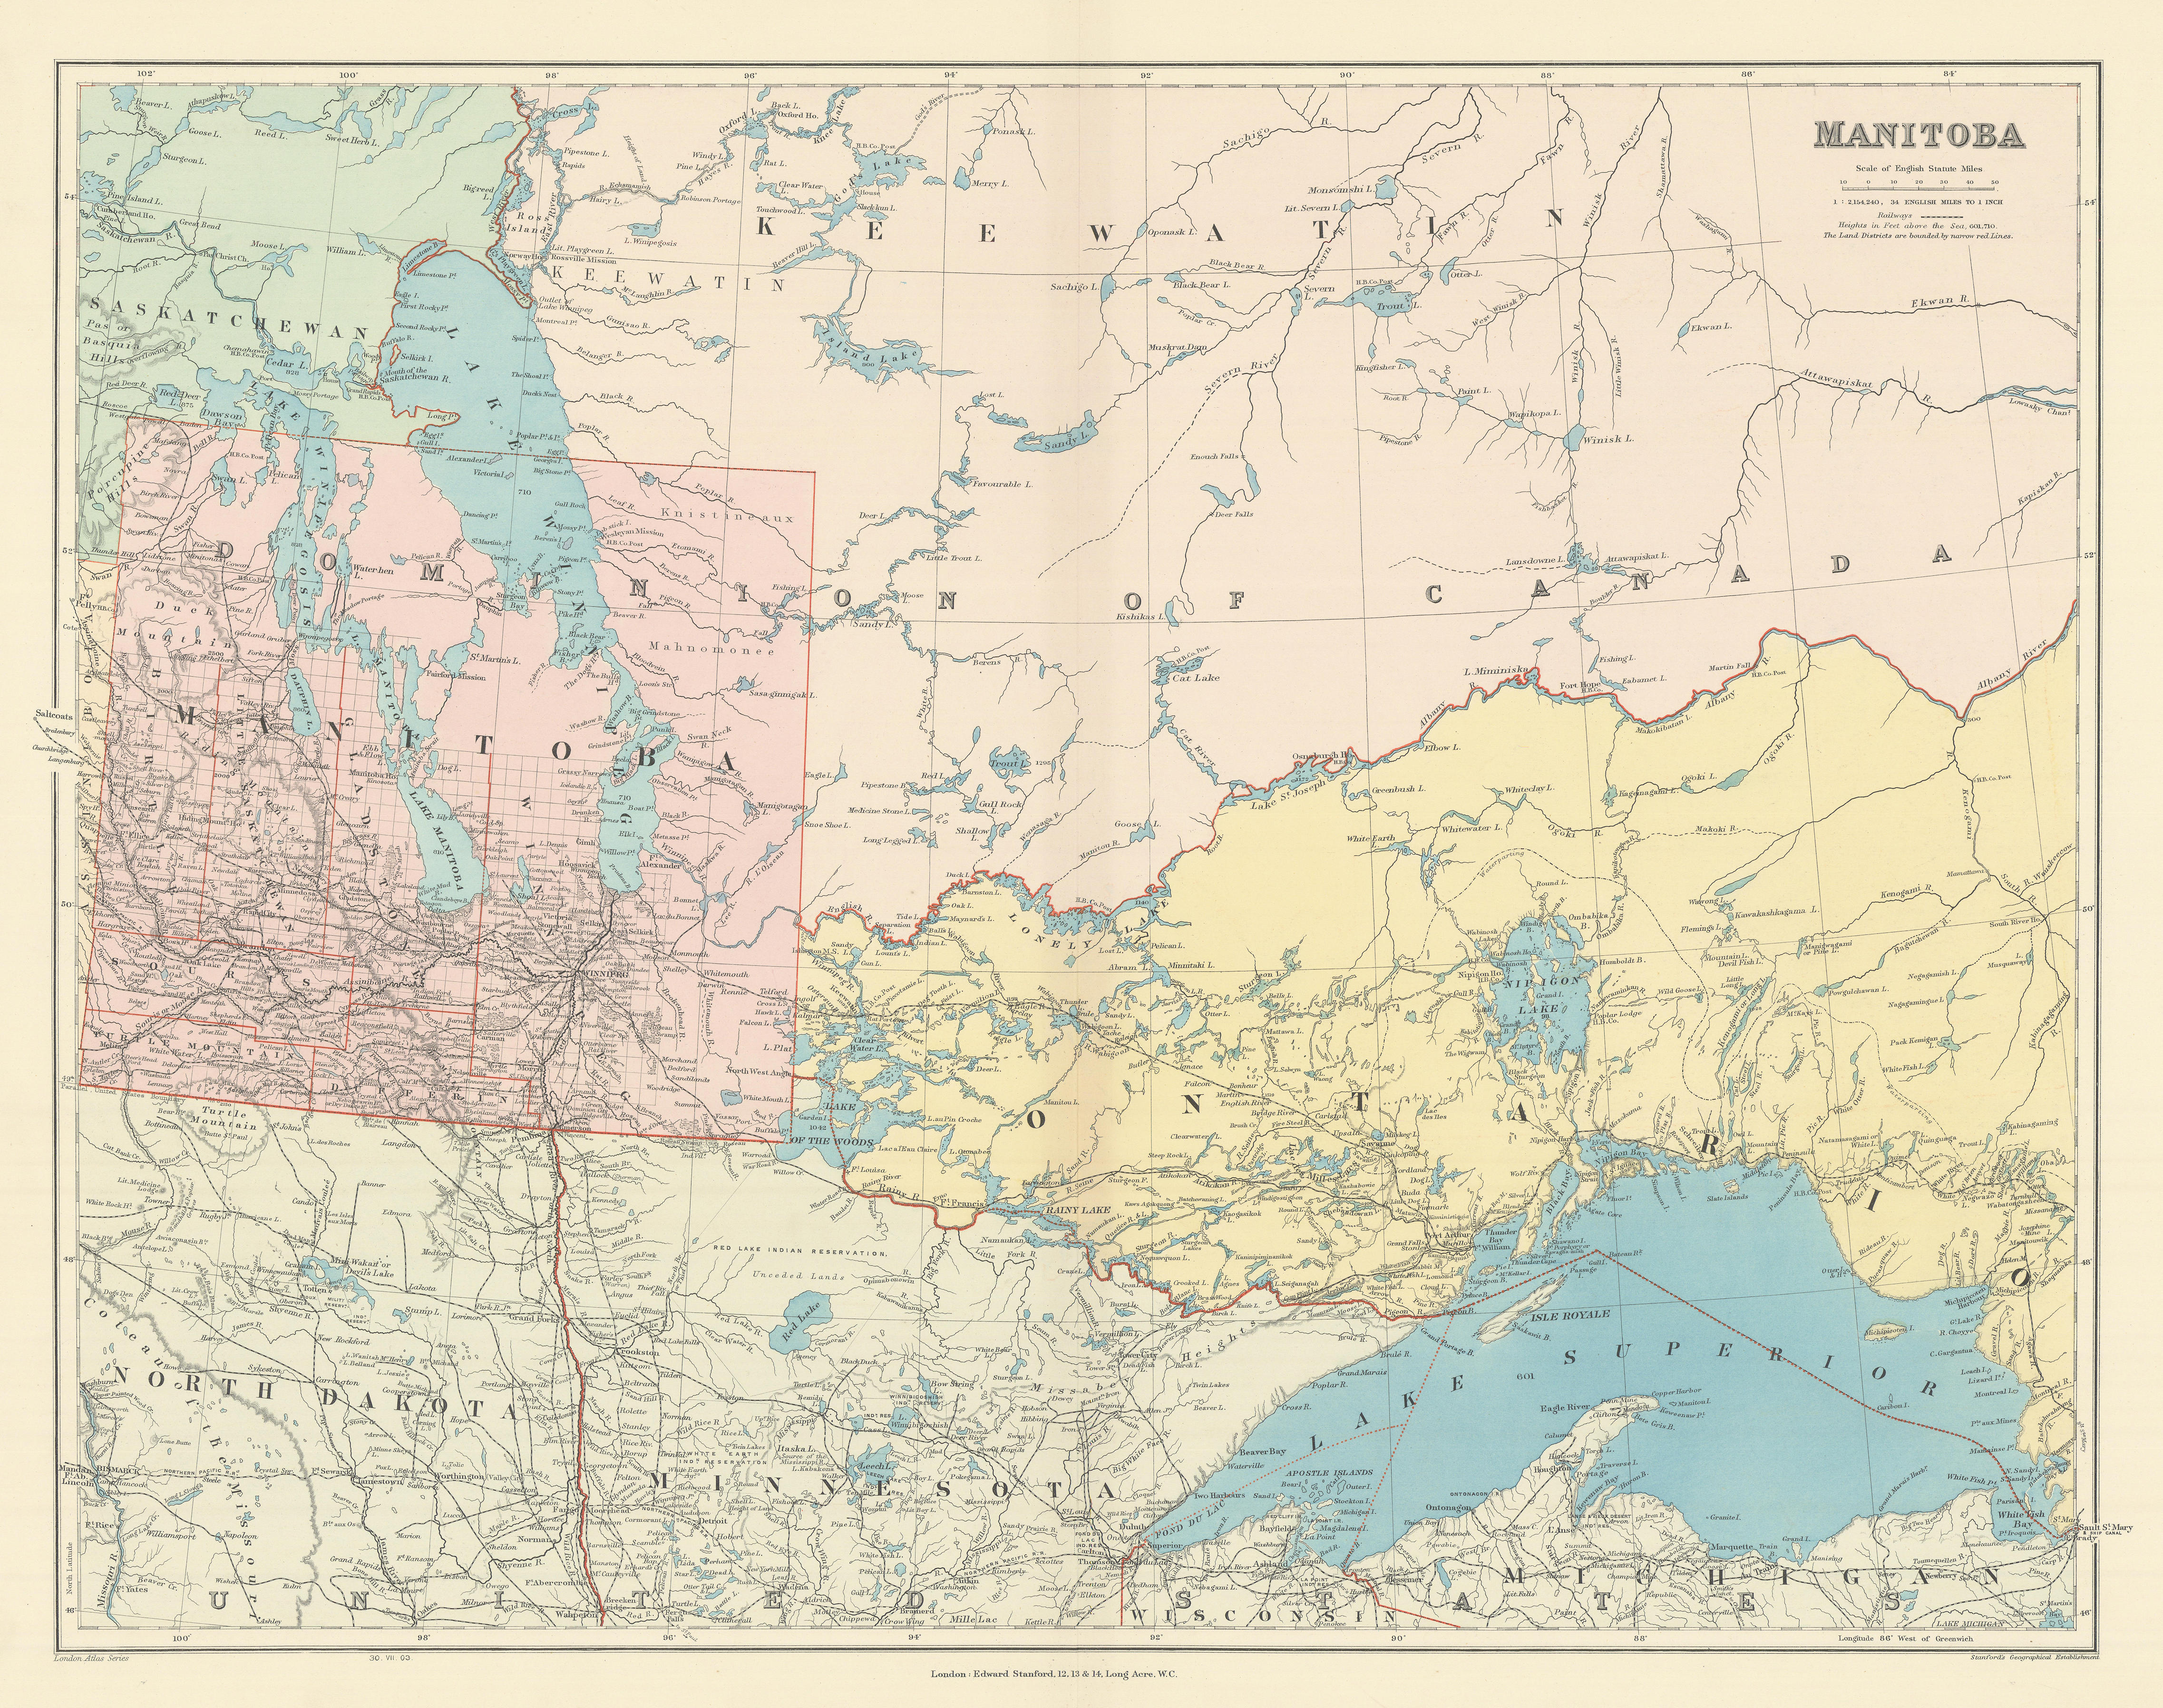 Associate Product Manitoba. West Ontario, Lake Superior & Winnipeg. Canada. STANFORD 1904 map